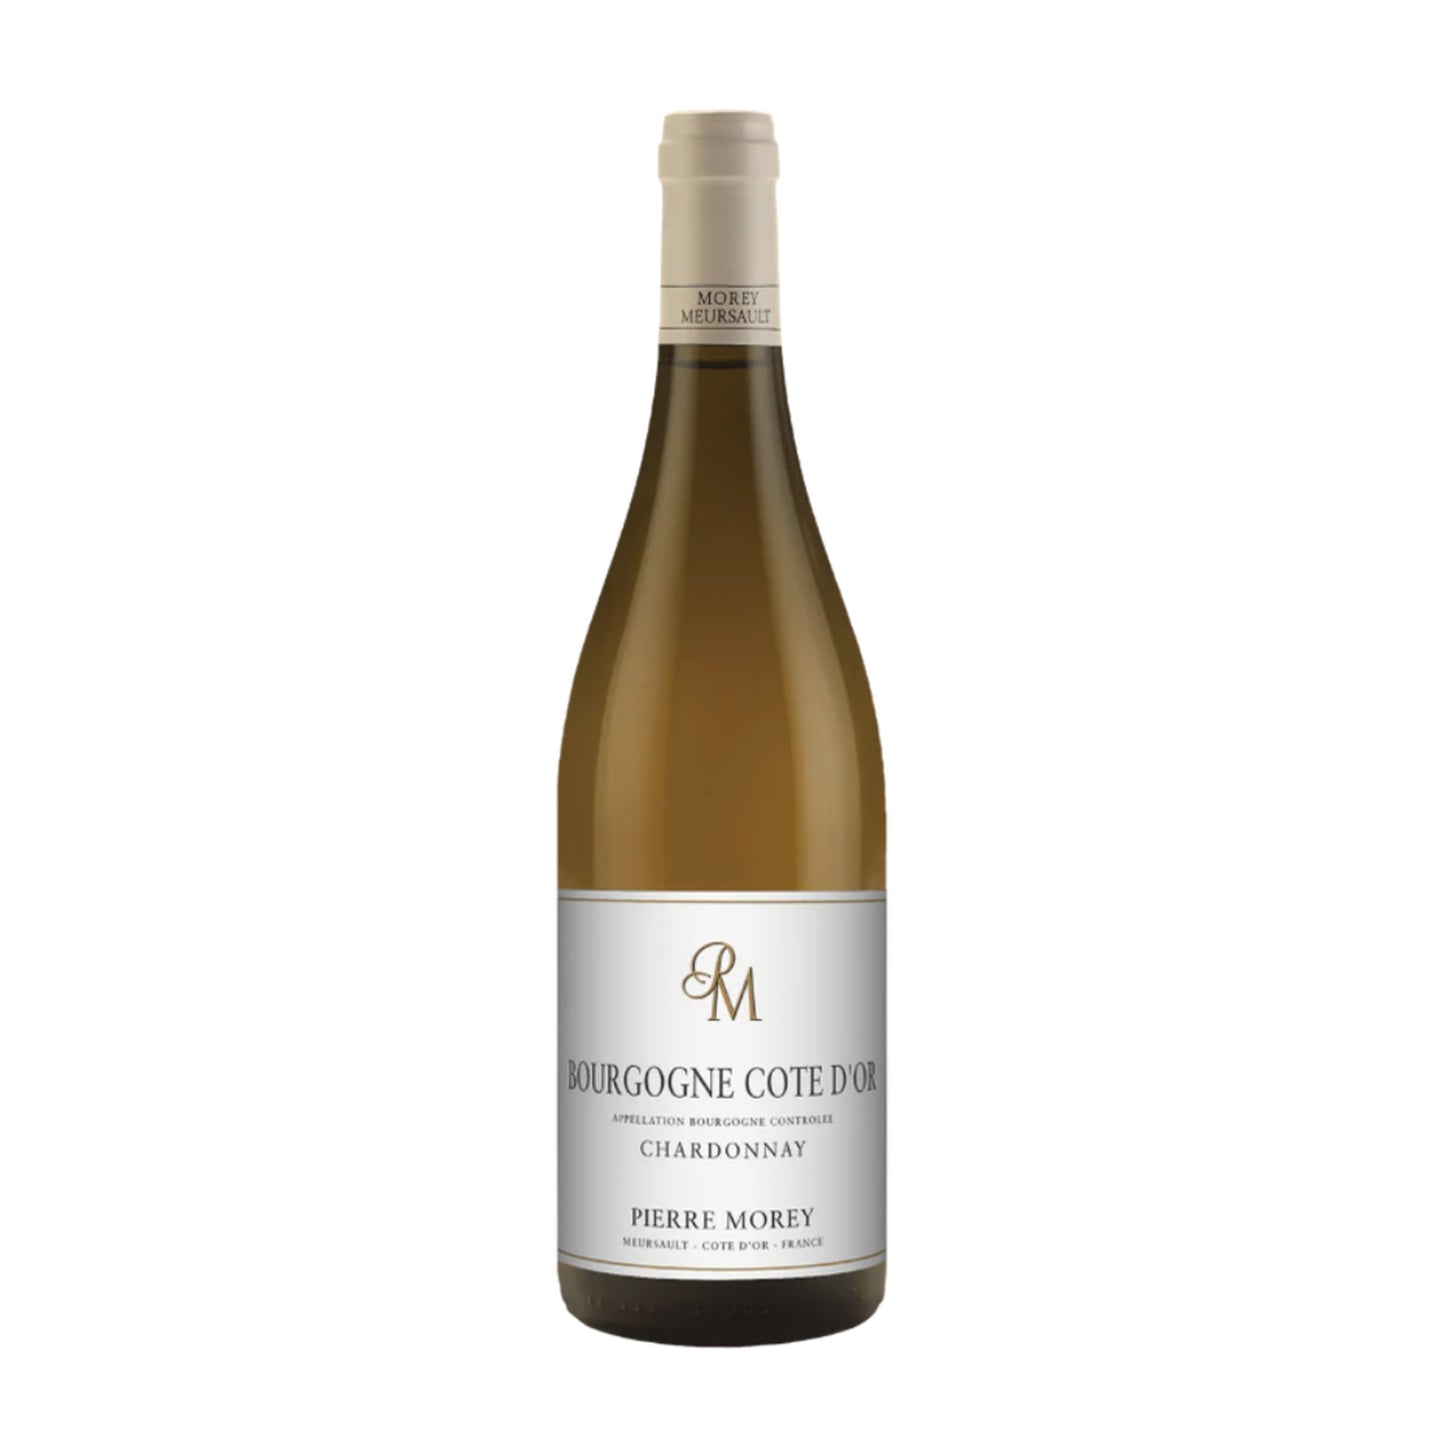 Domaine Pierre Morey Bourgogne Cote d'Or Chardonnay, 2019